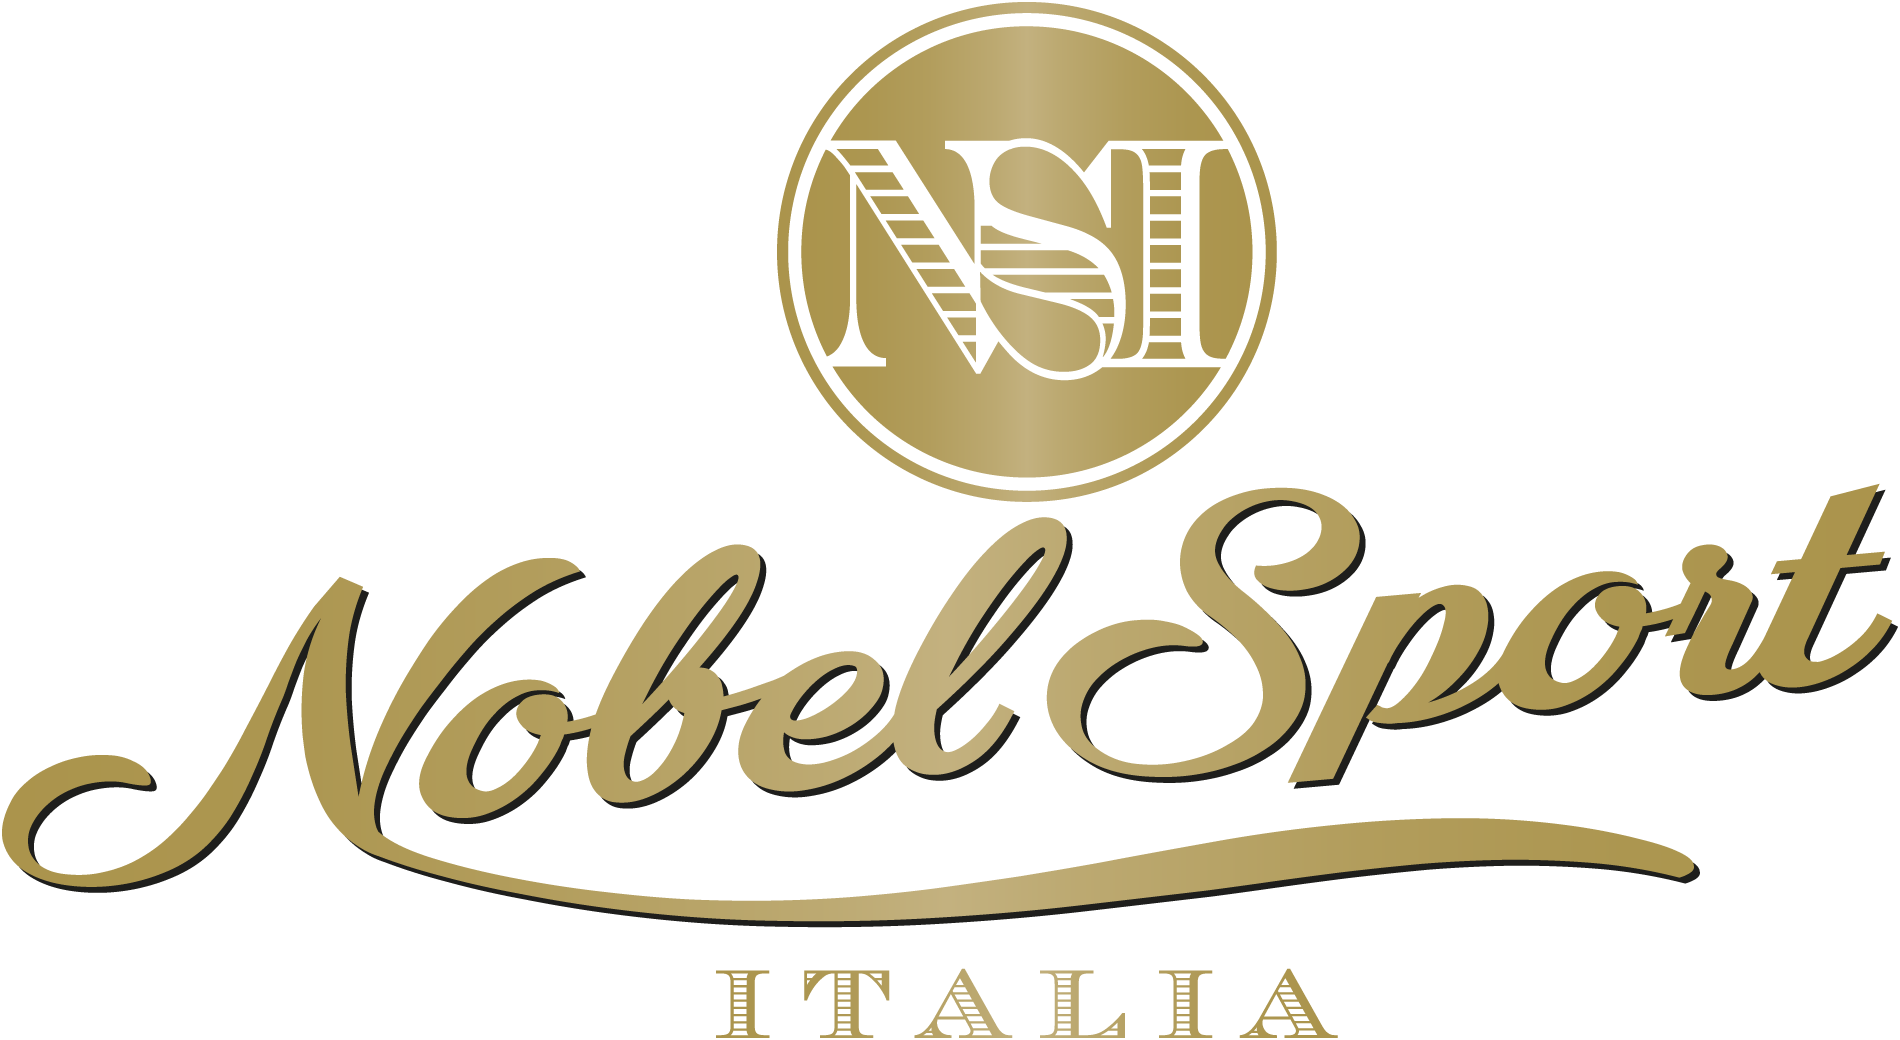 NOBEL SPORT ITALIA